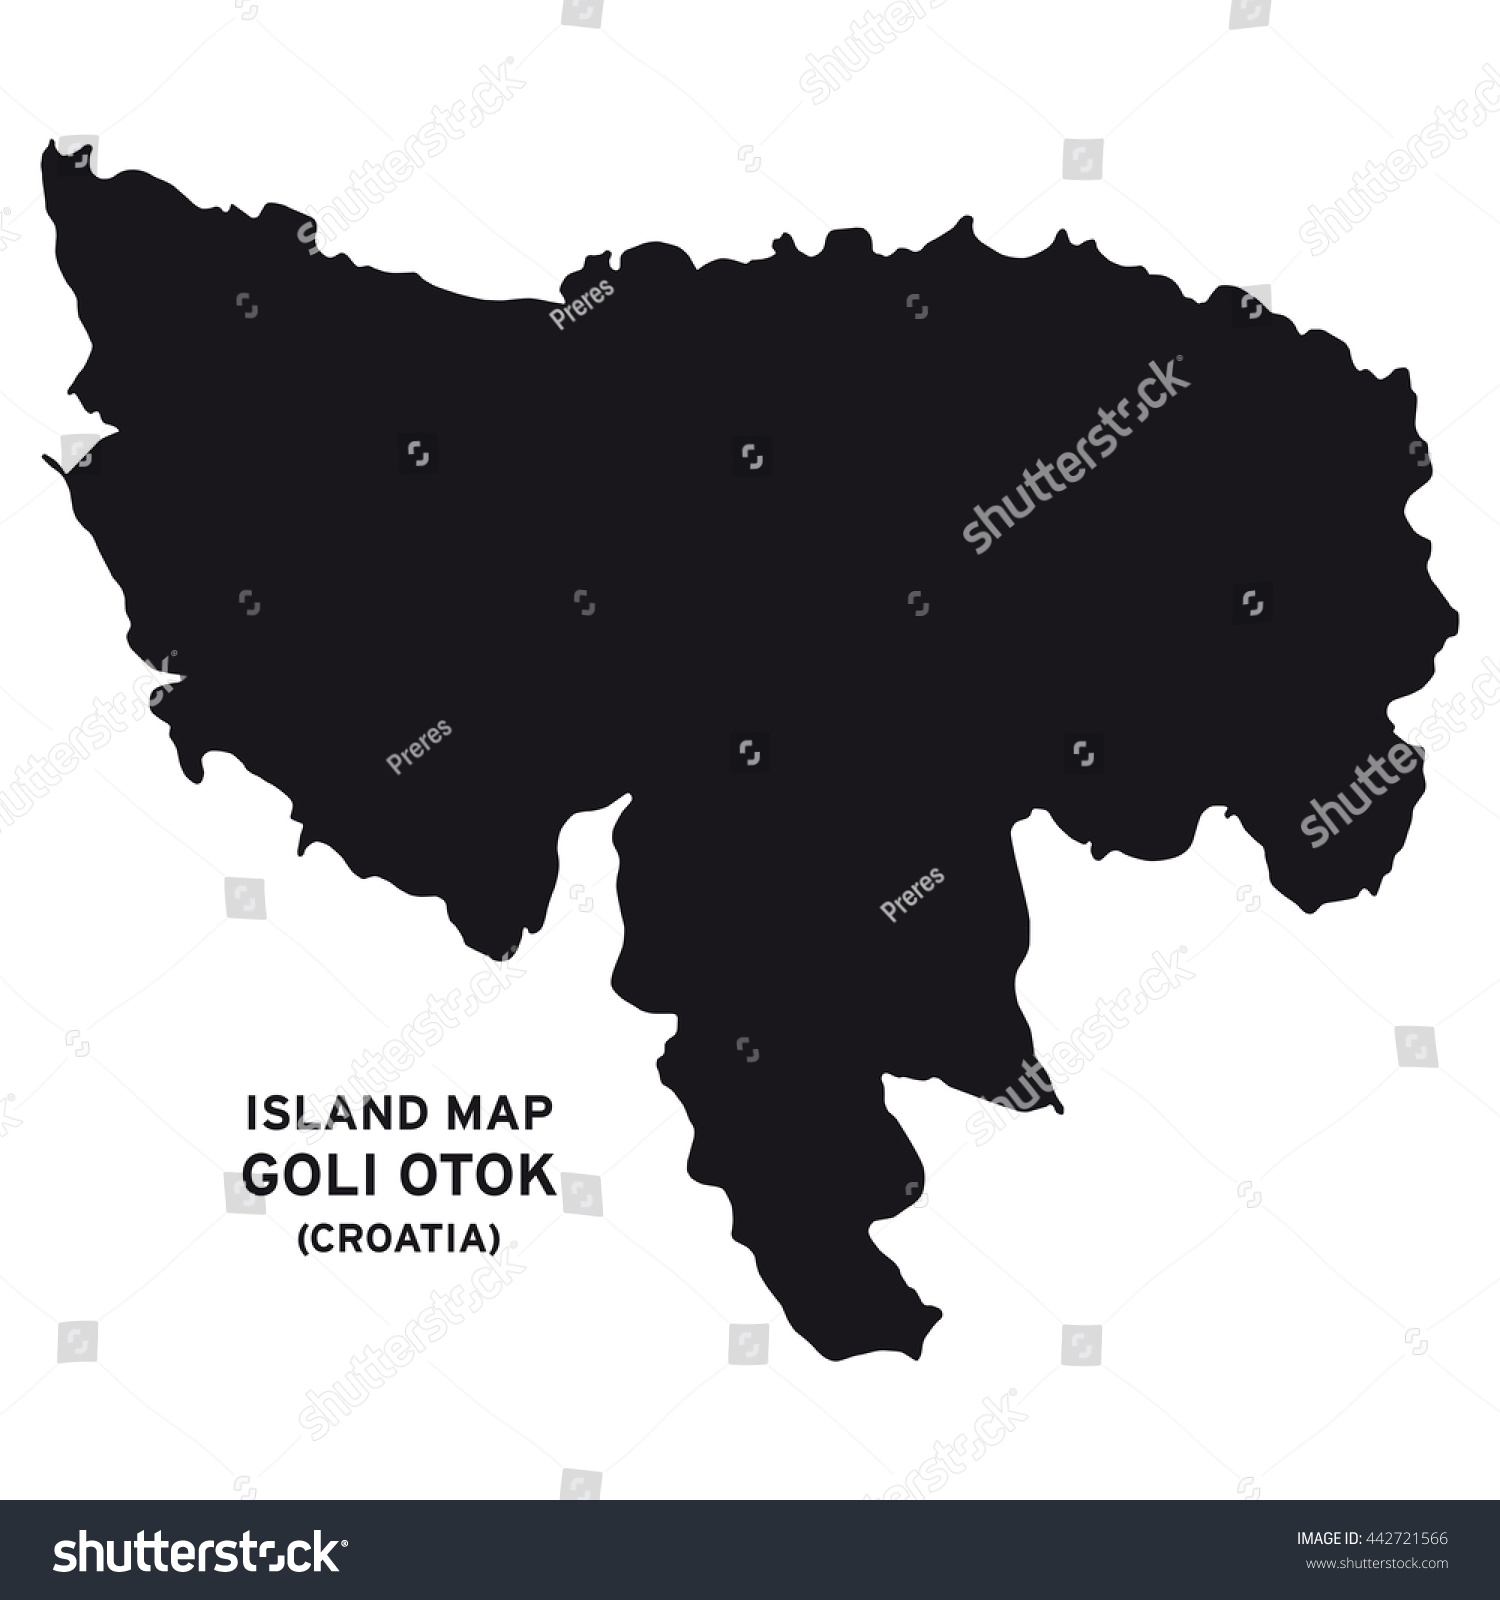 Goli otok maps Physical Map